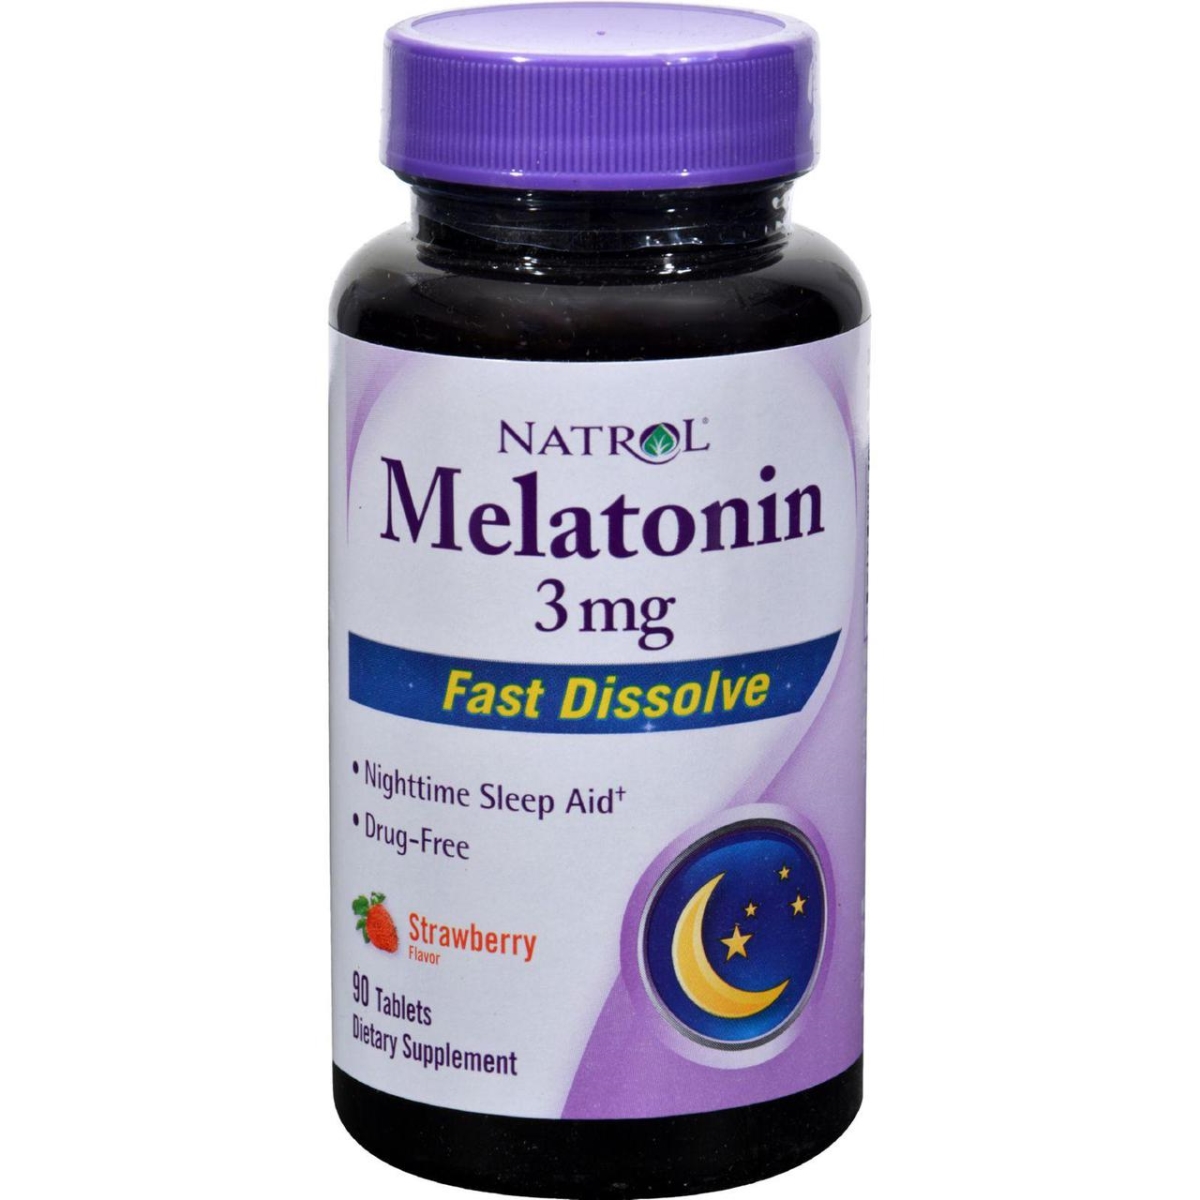 Hg1045269 3 Mg Melatonin Fast Dissolve Strawberry - 90 Tablets